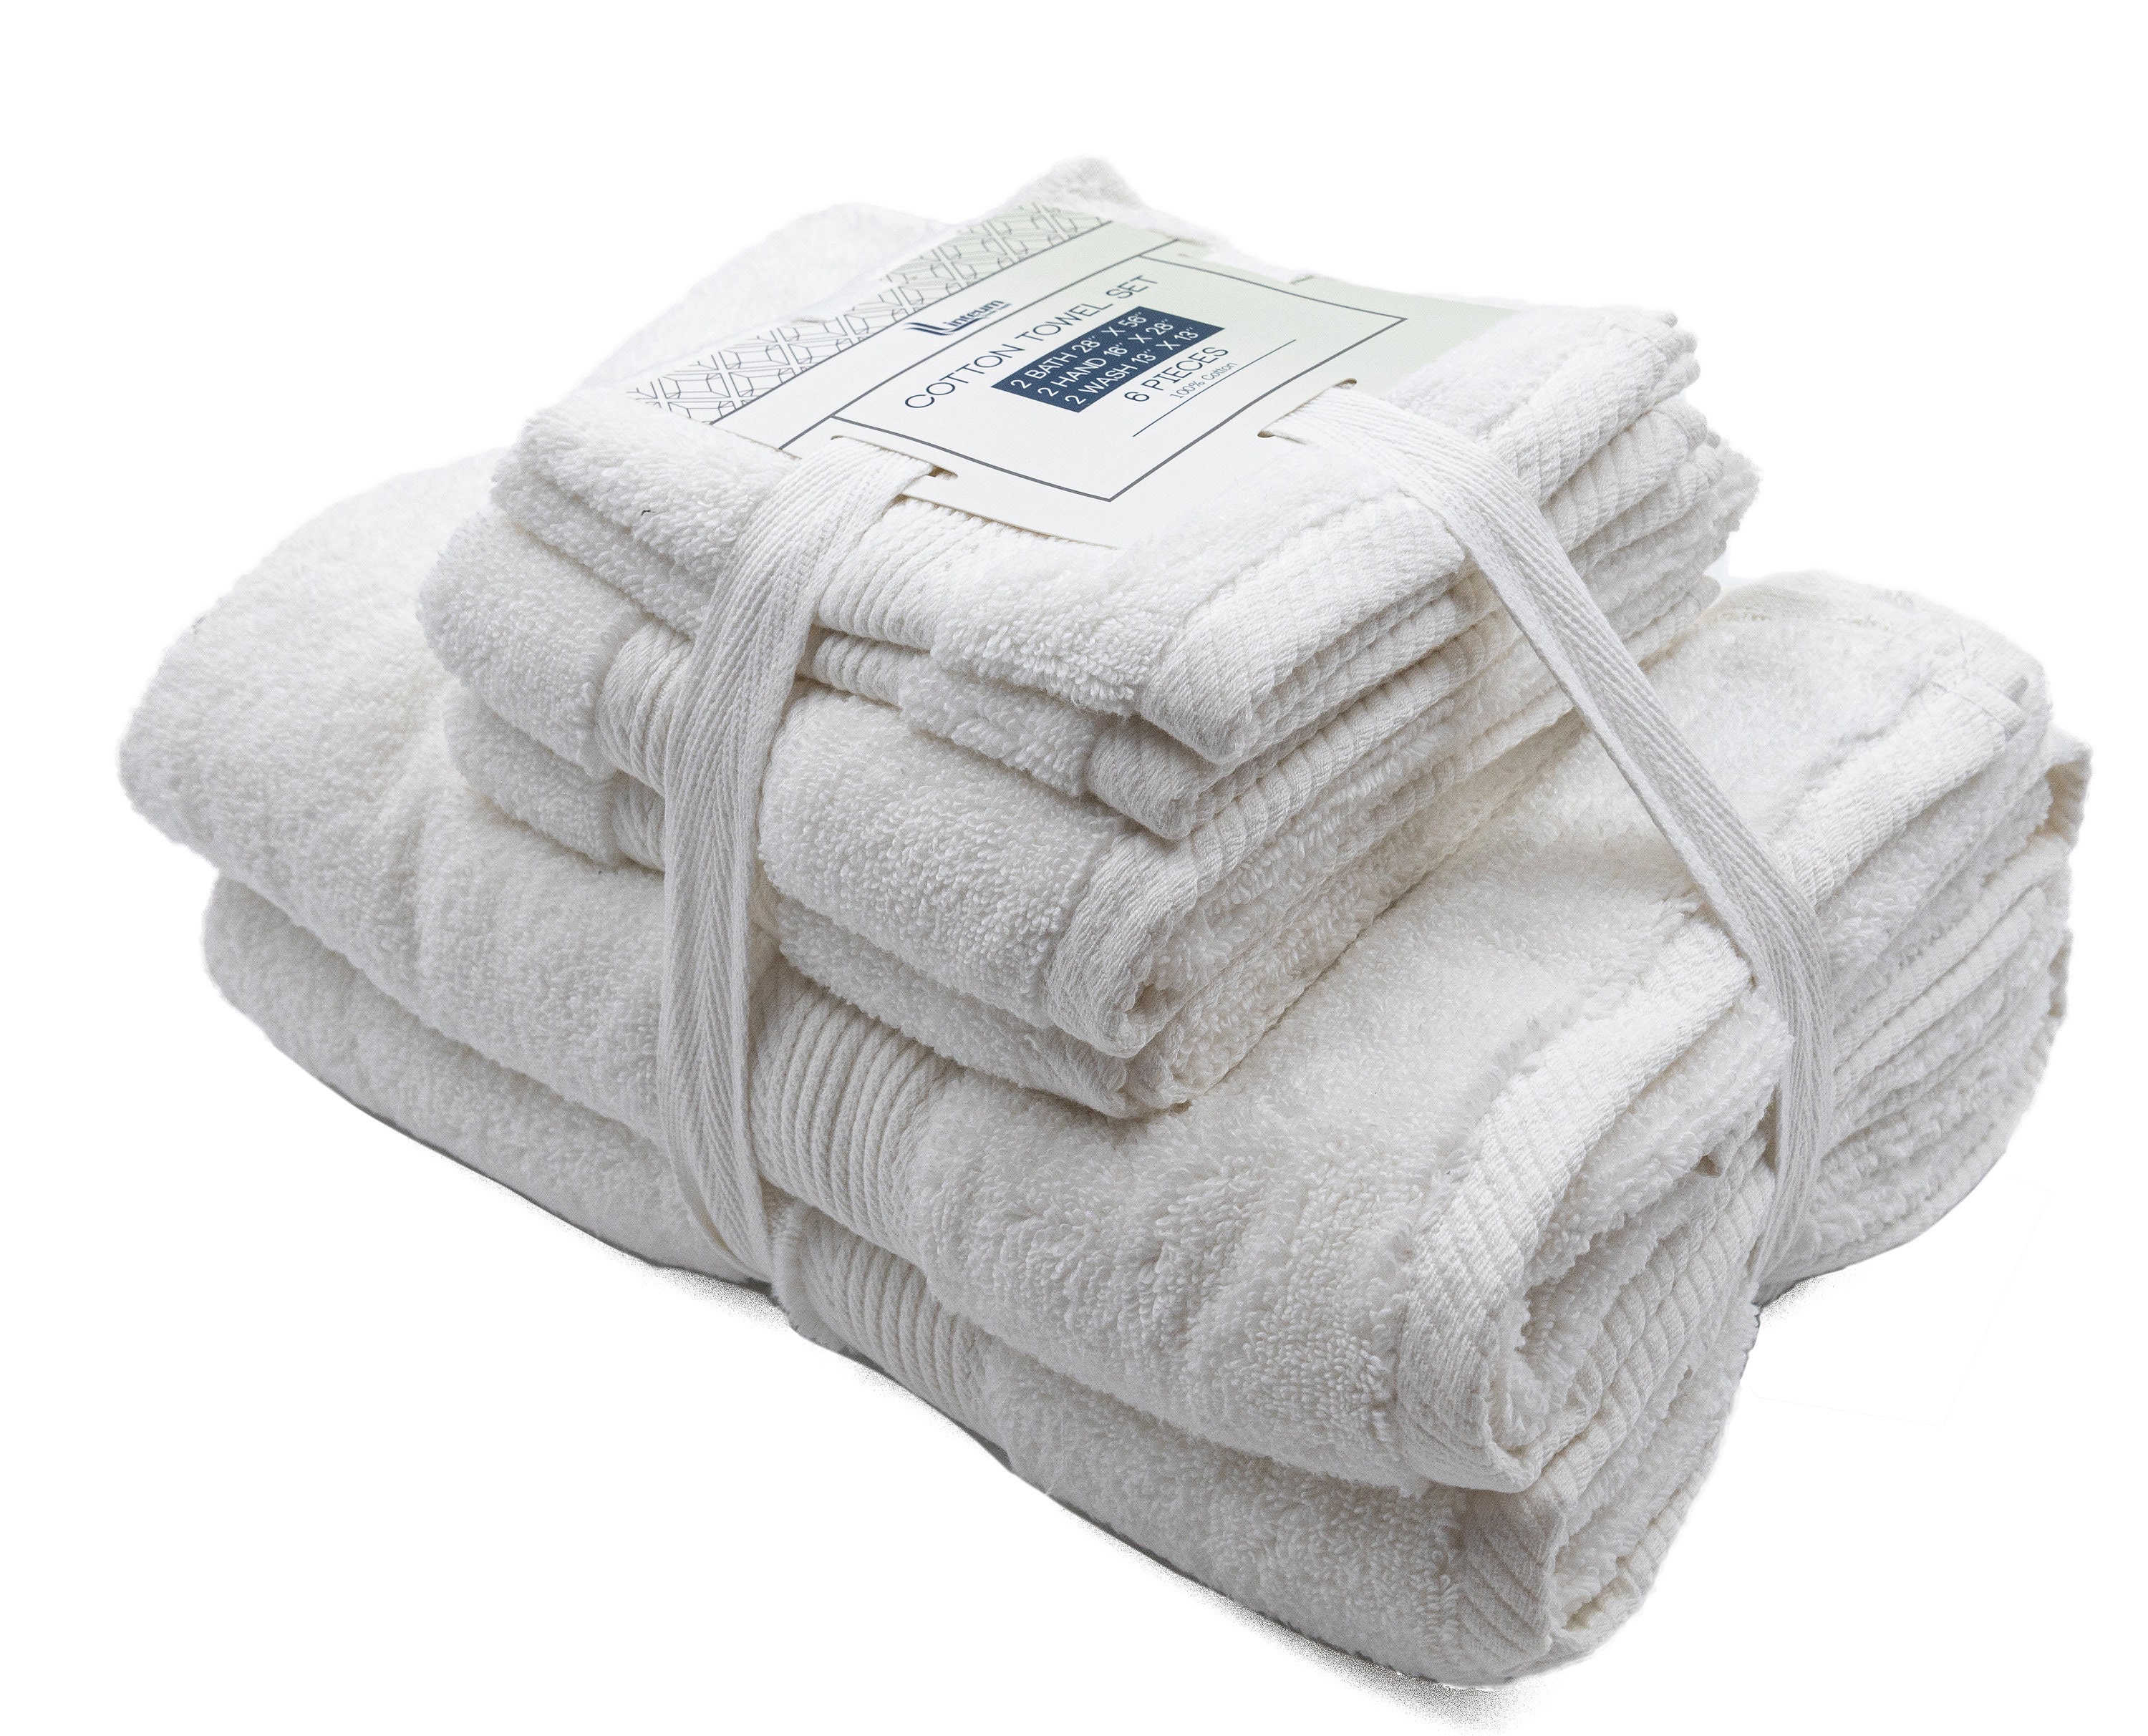 Metro 6-Piece Bath Towel Set, Two Each - Washcloths, Hand Towels